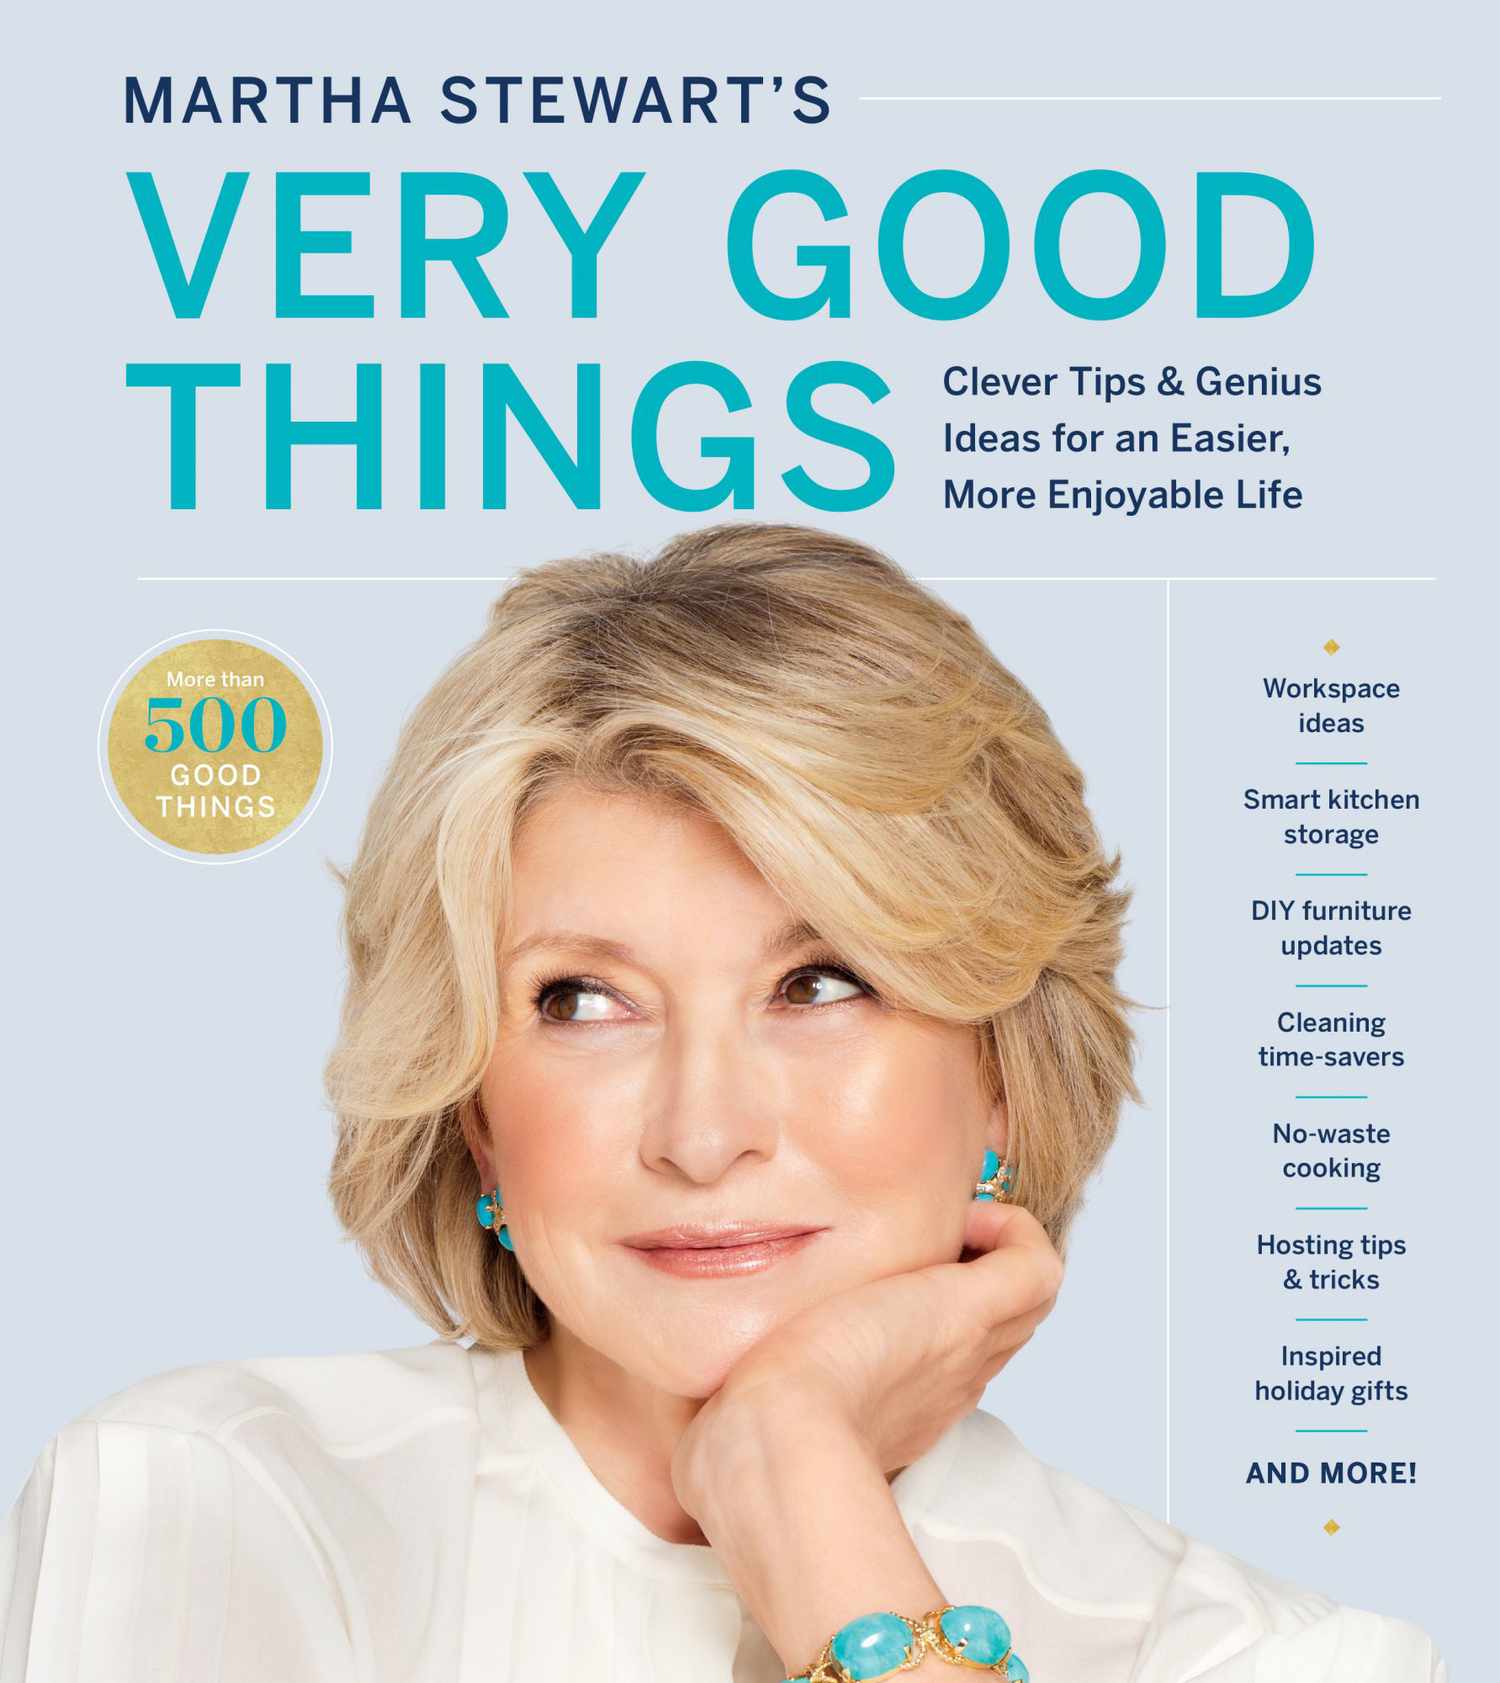 Martha Stewart's Very Good Things Book Cover